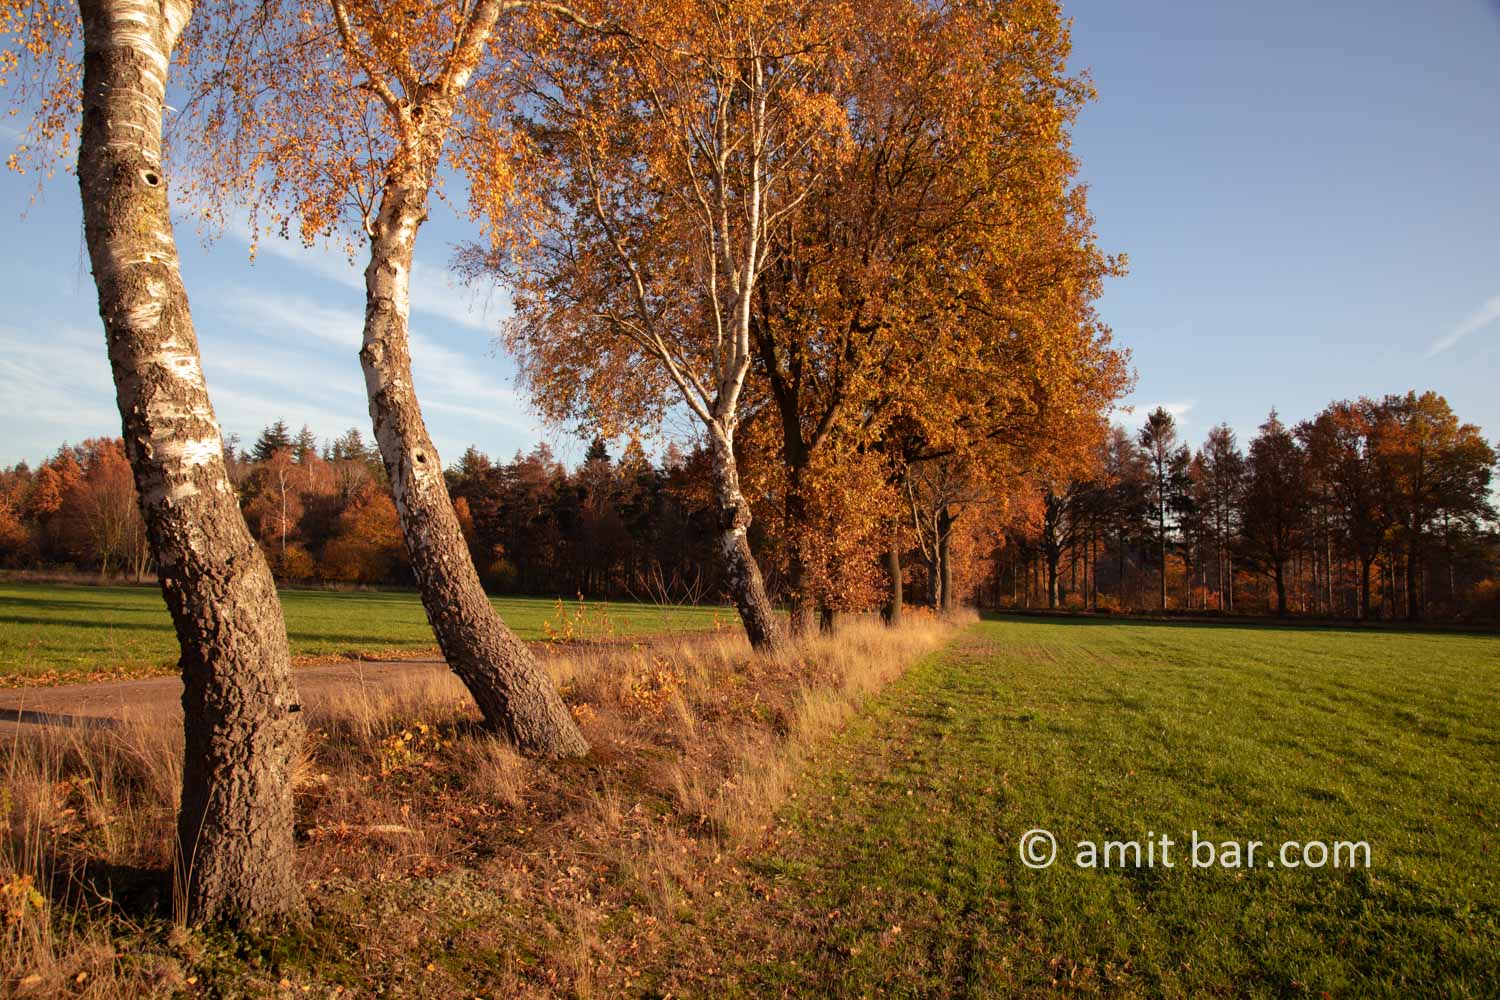 Autumn colors II: Autumn colors in the Achterhoek region, The Netherlands